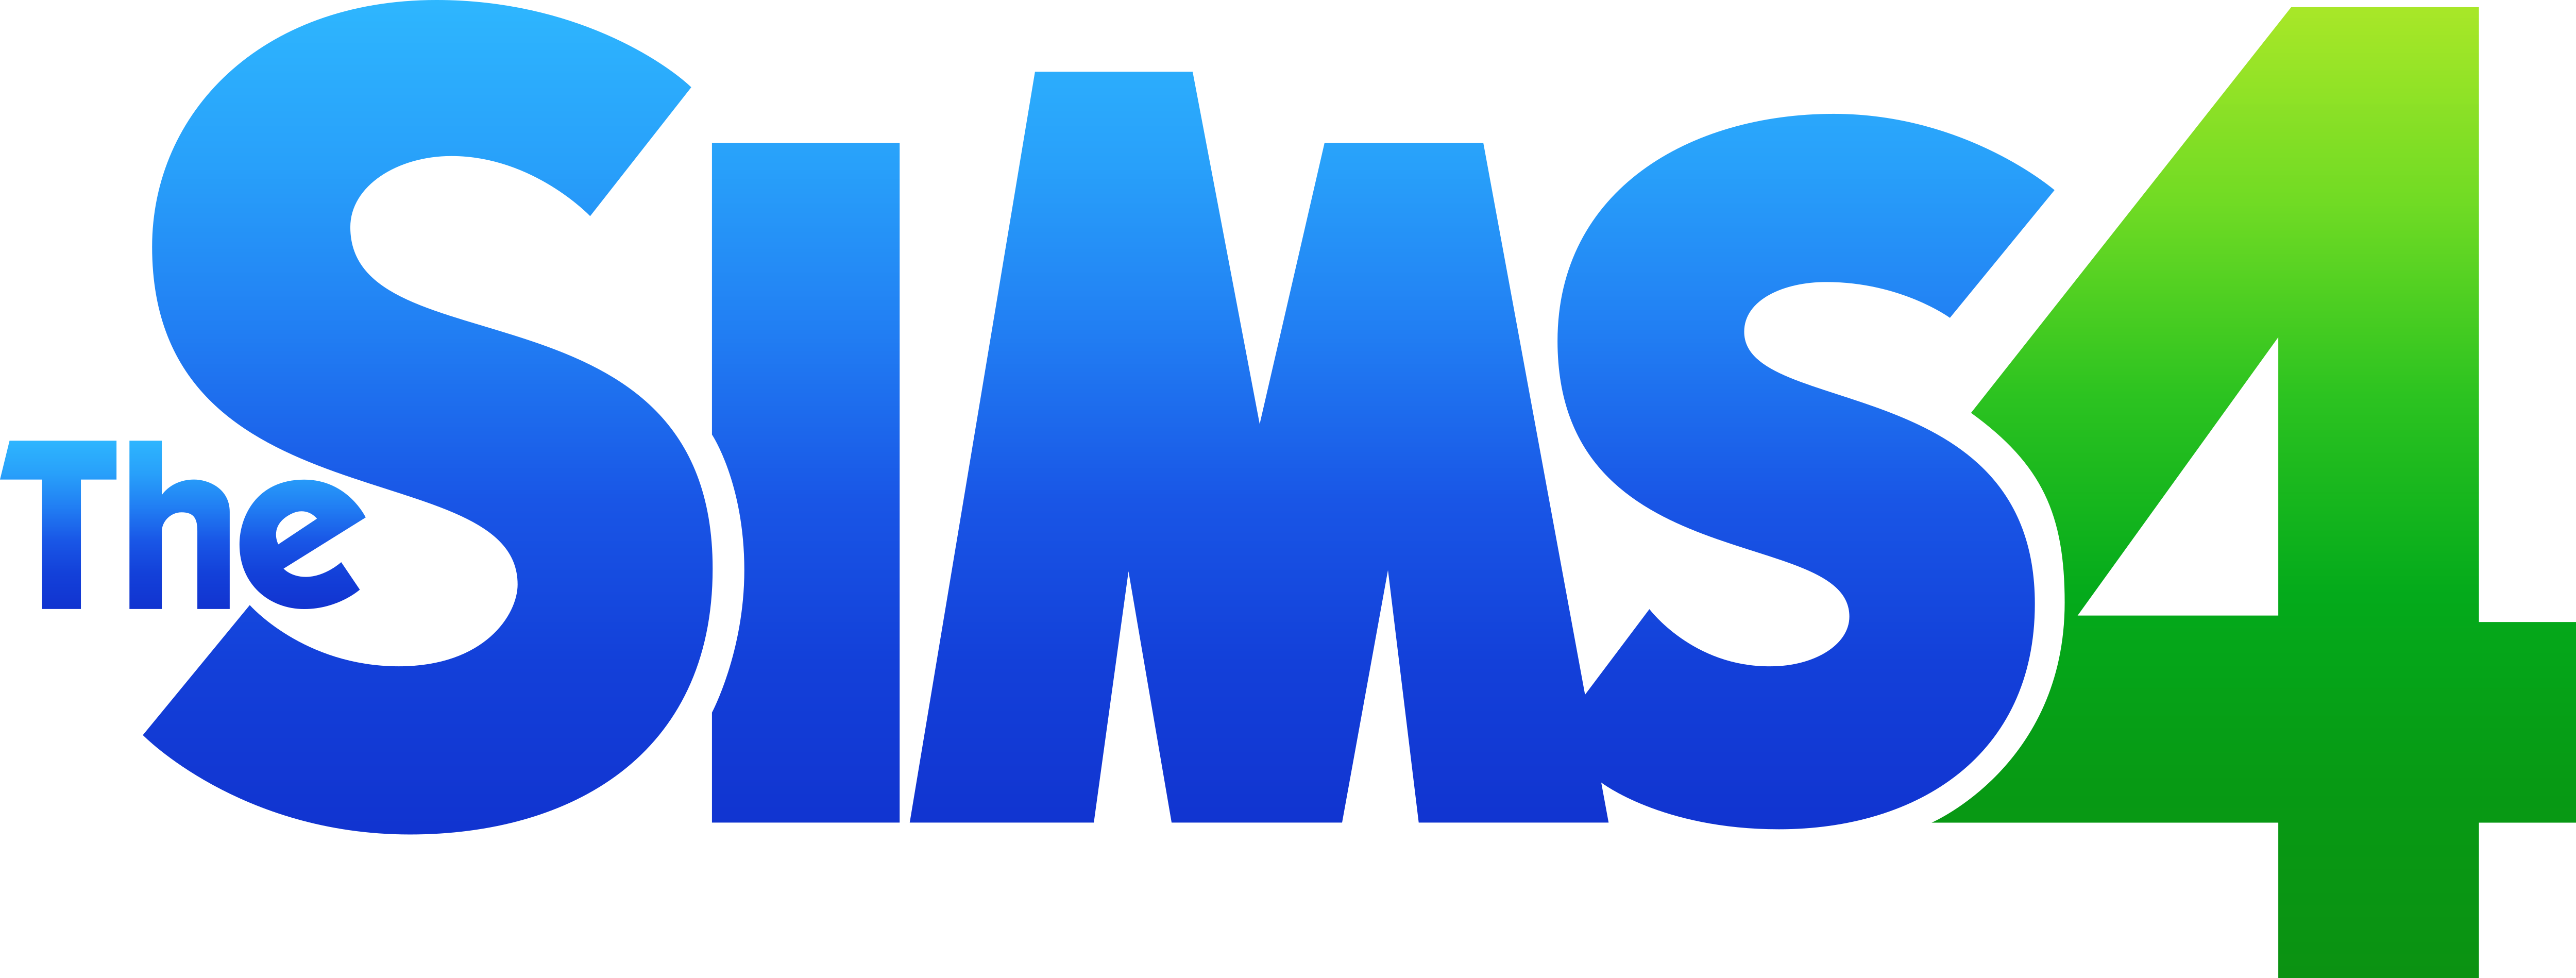 Sims 4 Logo Yellow